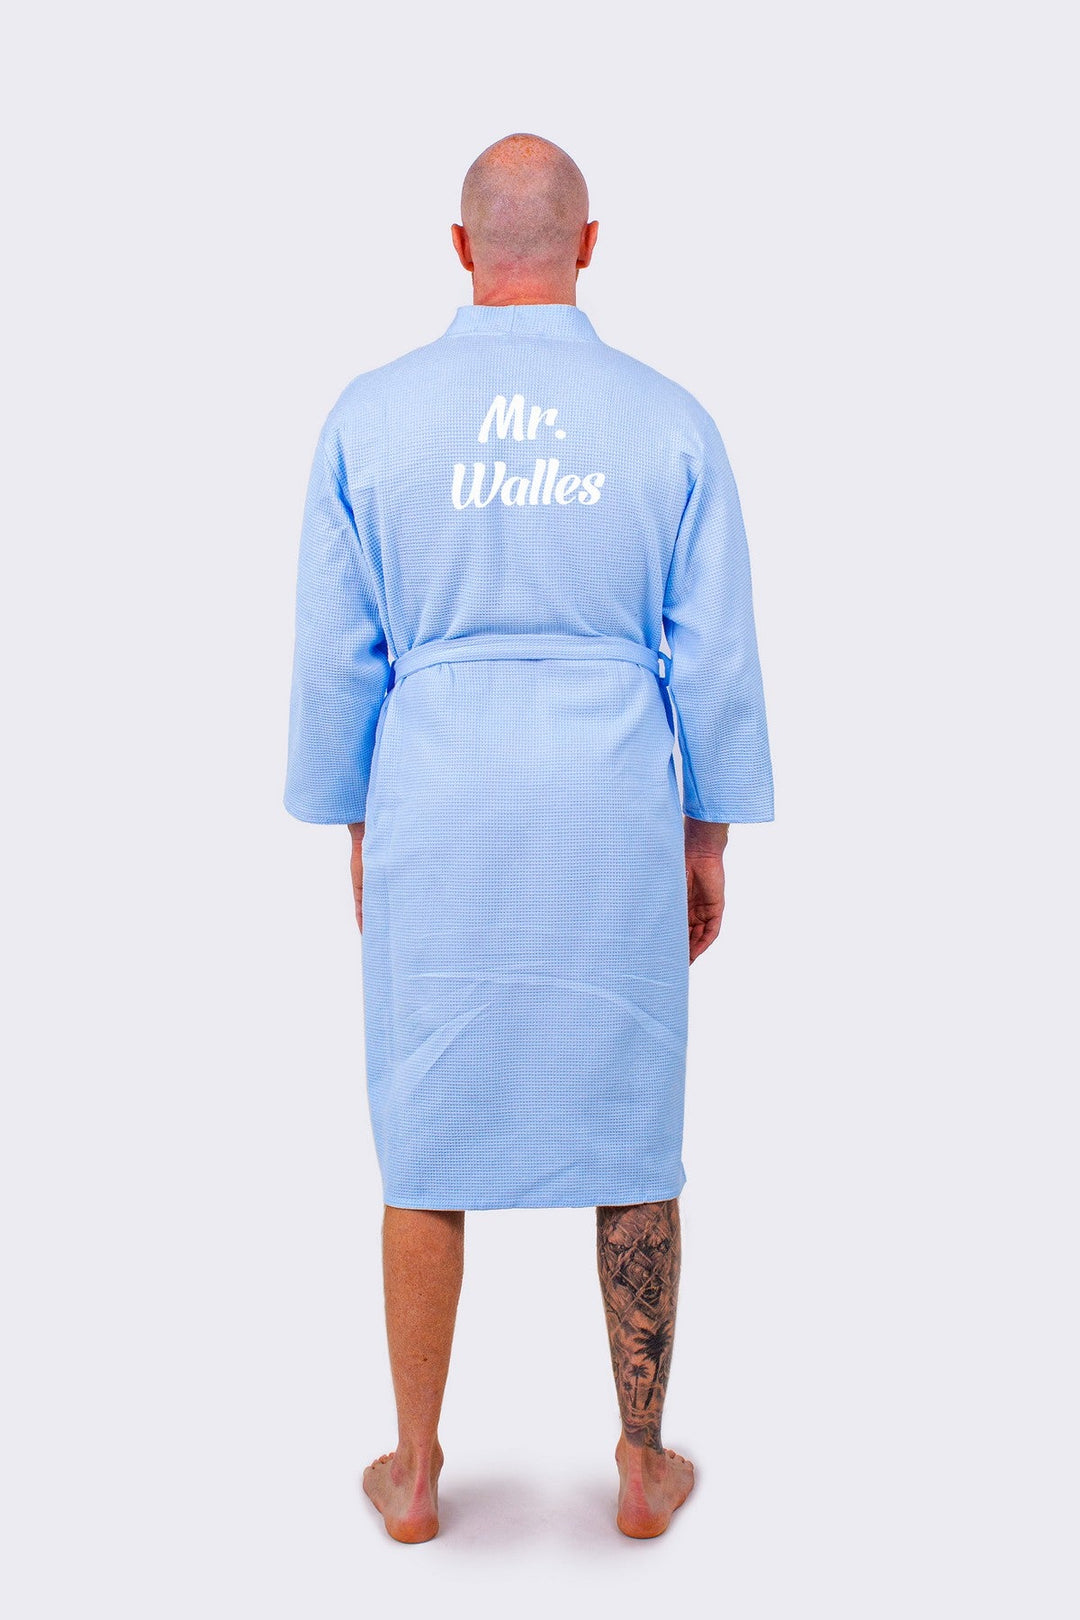 Men’s Custom Long Cotton Waffle Robe - men’s robes